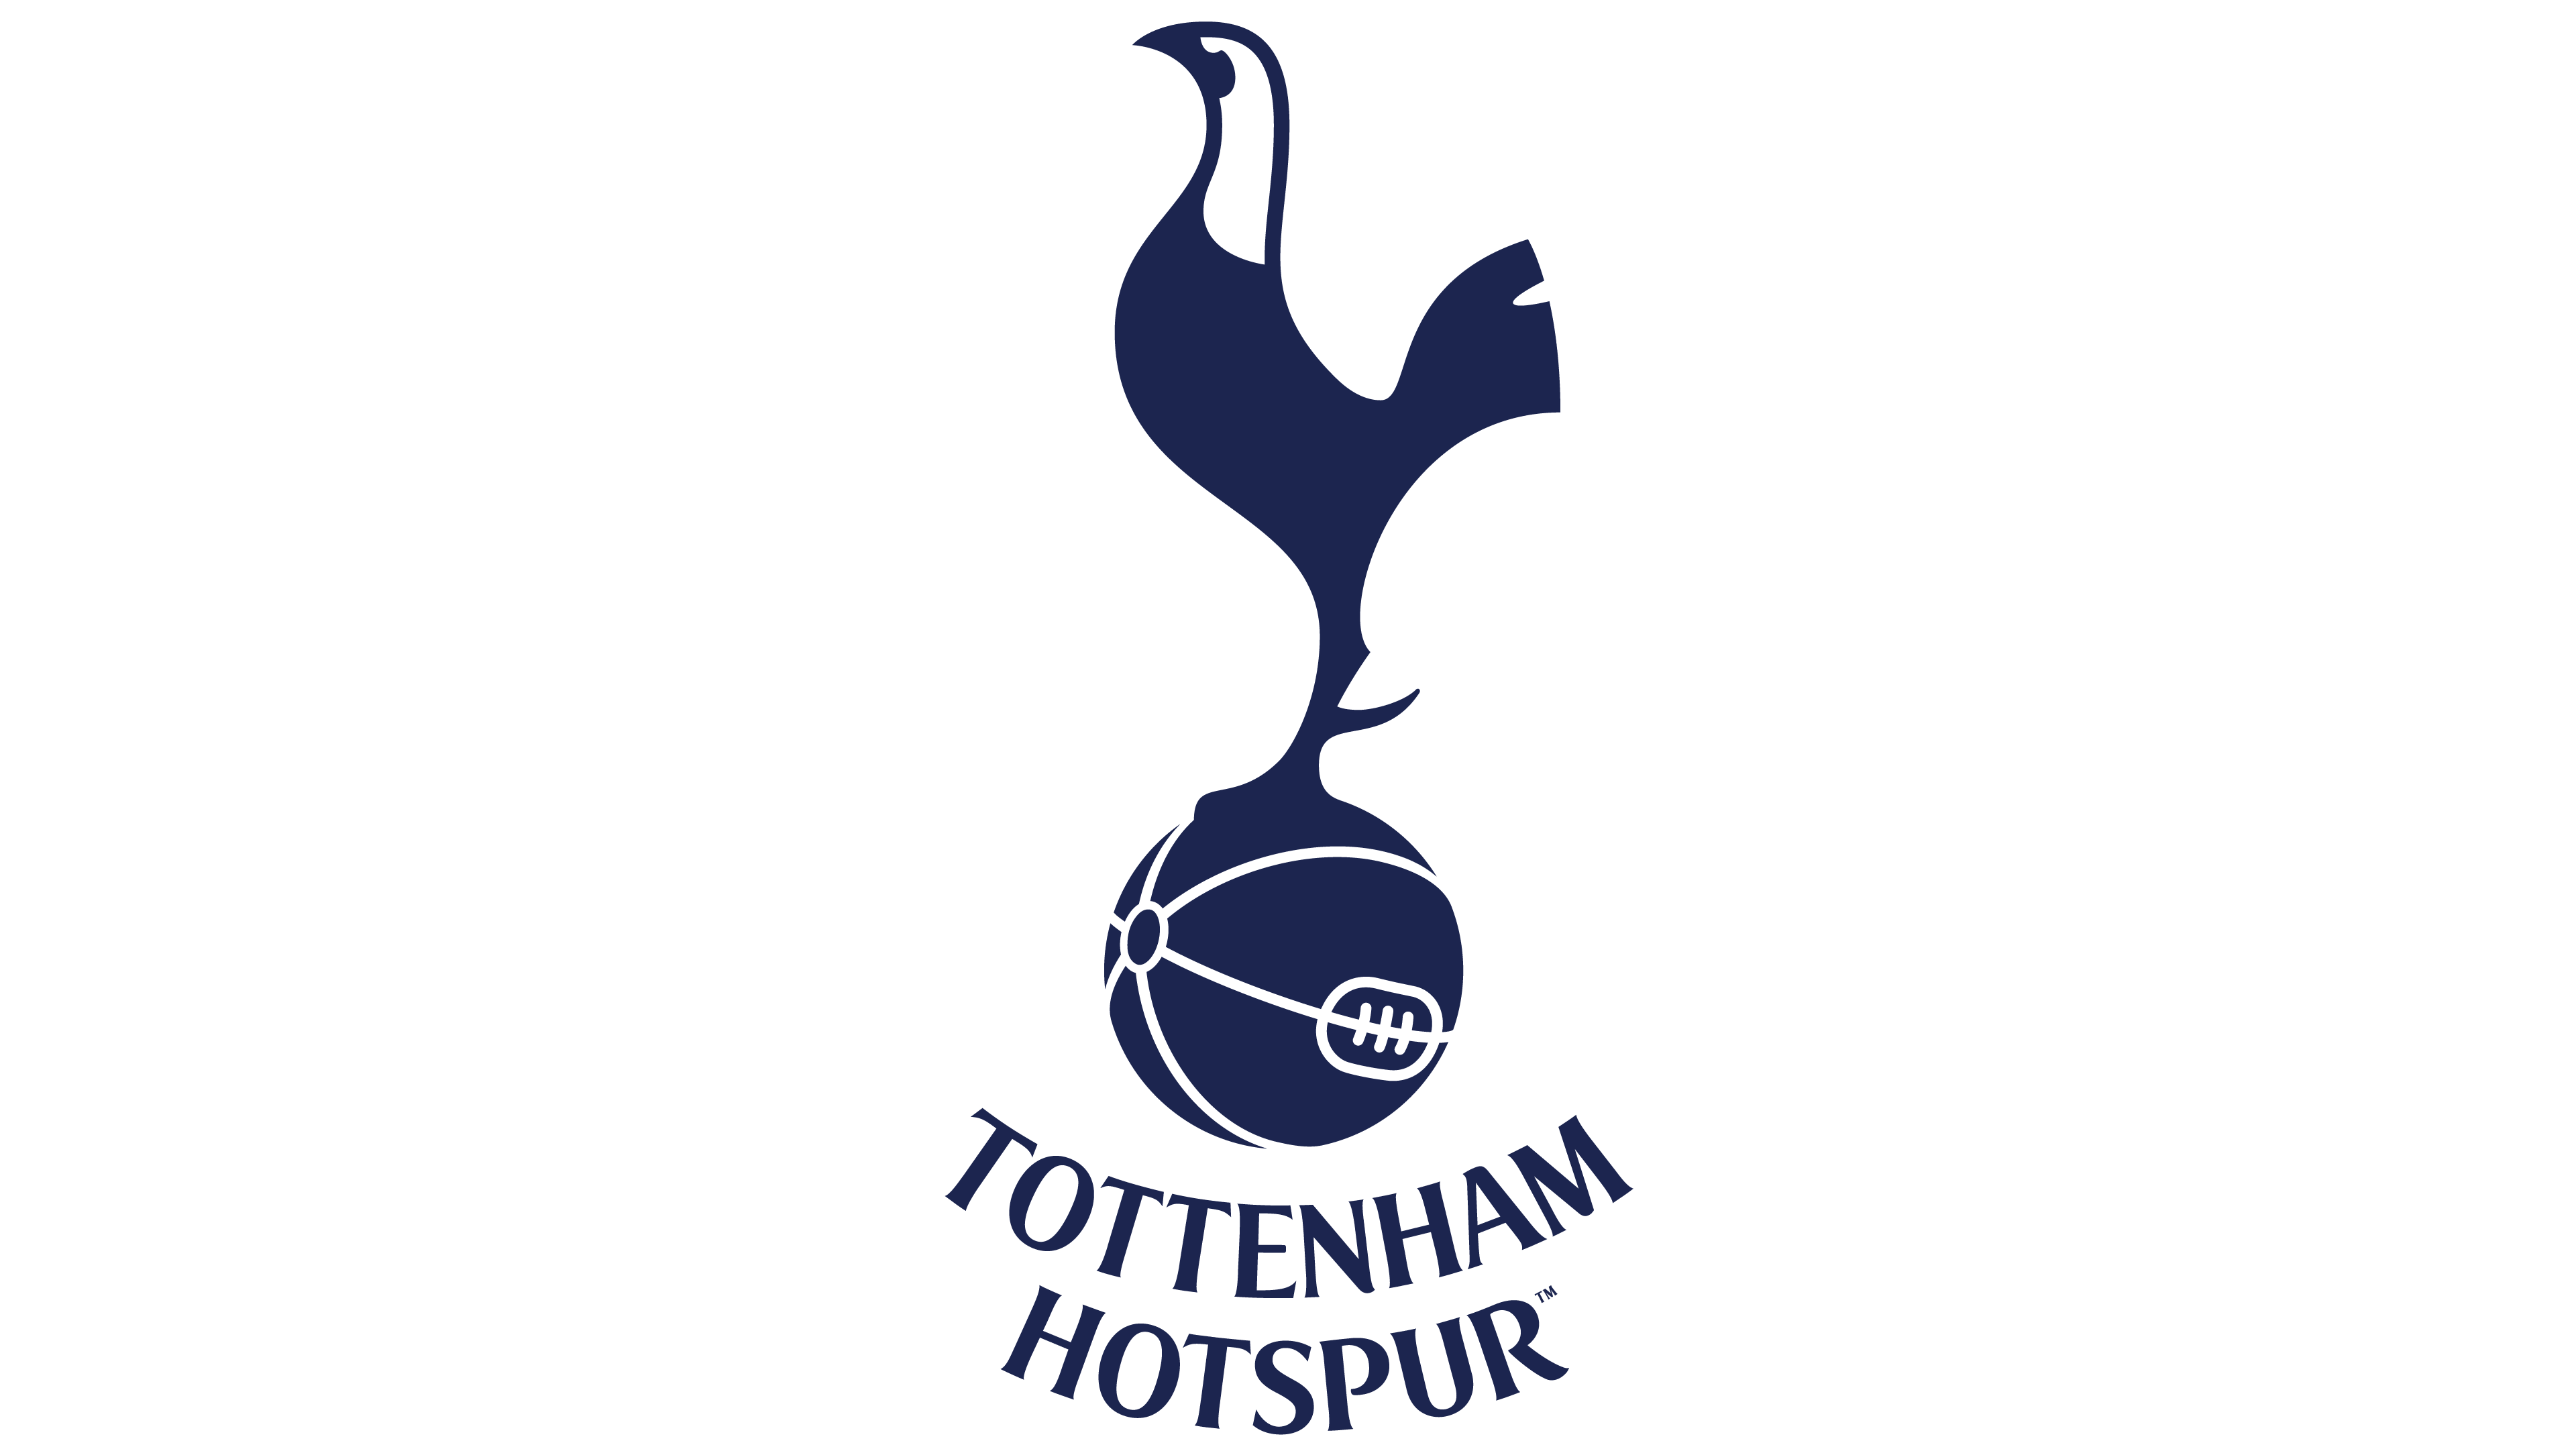 Tottenhsm Logo - Tottenham Hotspur Logo - Interesting History of the Team Name and emblem